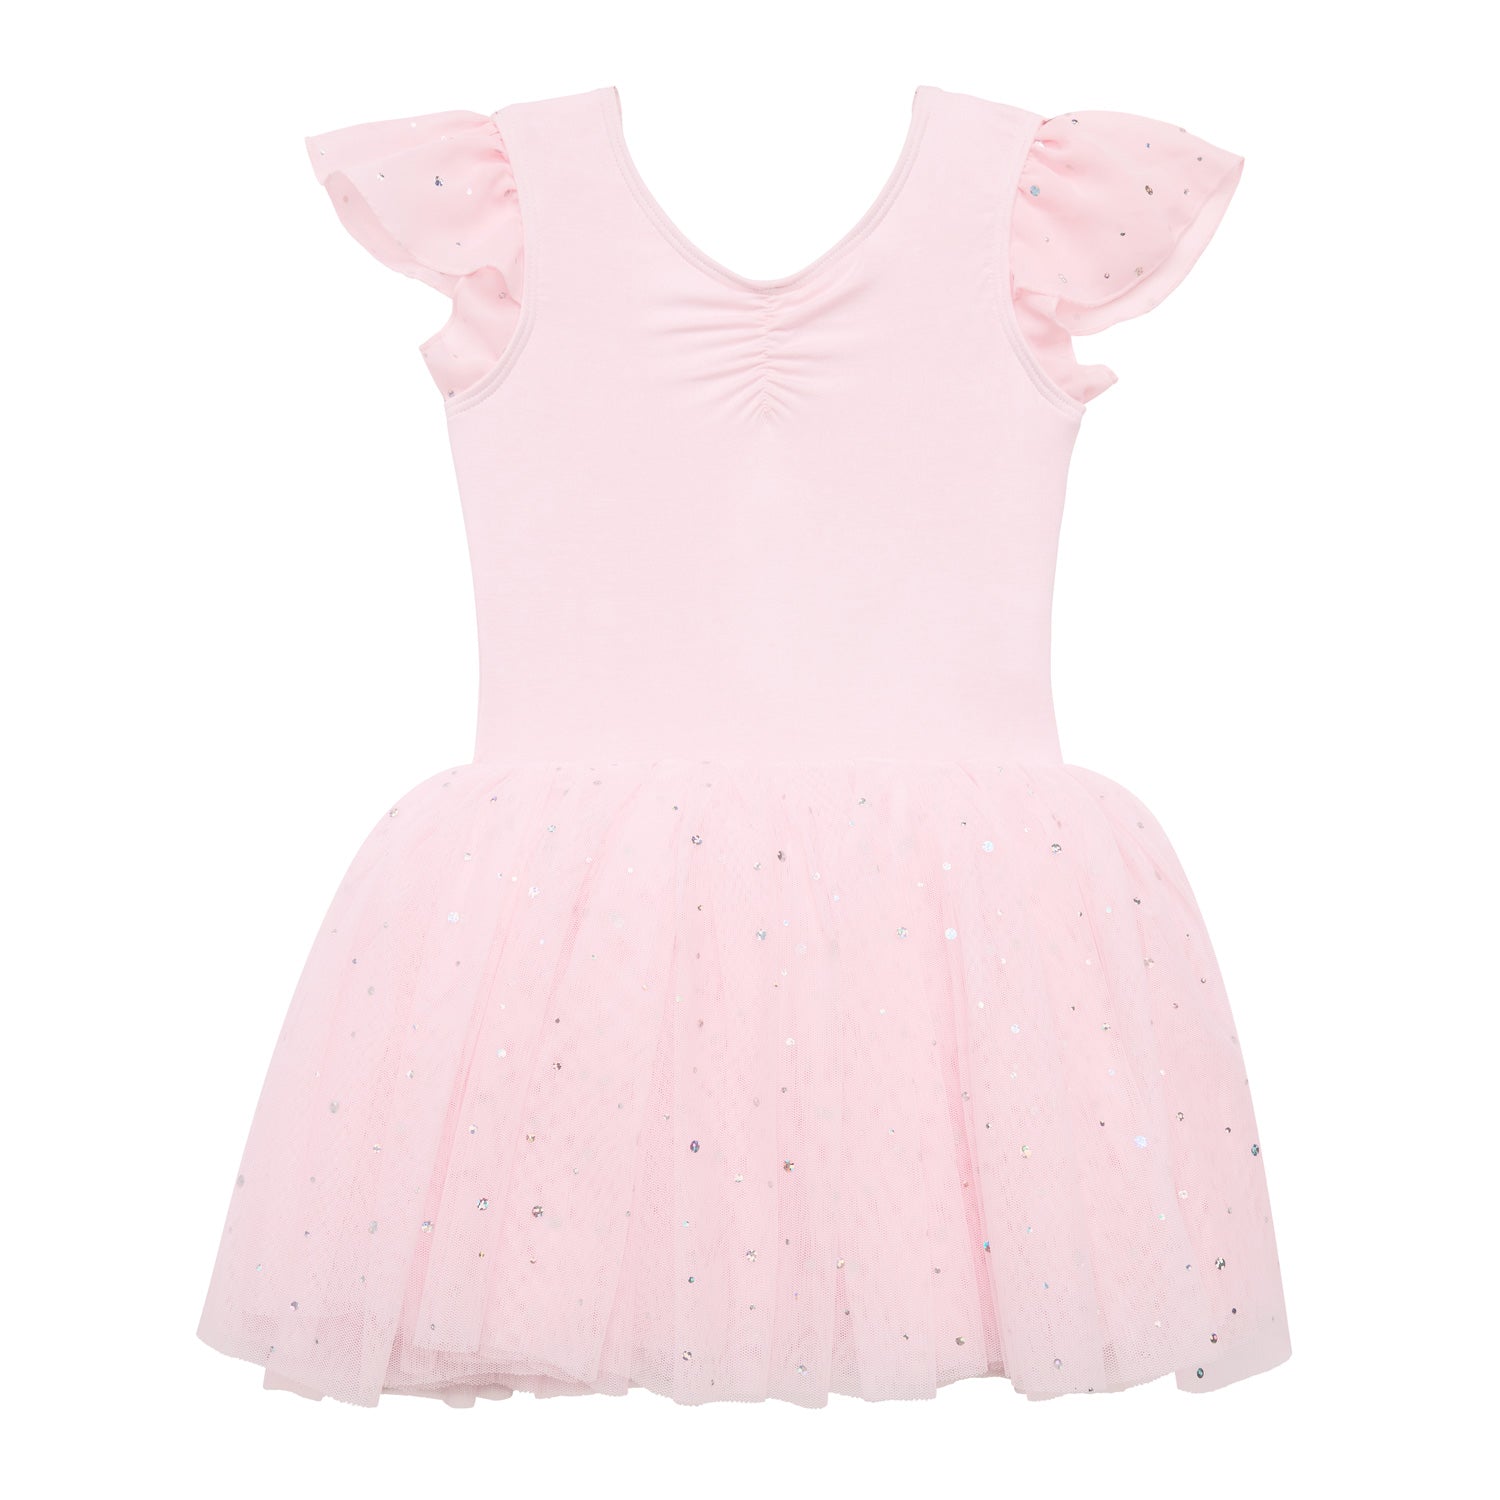 Flo Dancewear Girls Tutu Dress with Flutter Sleeve in Pink 